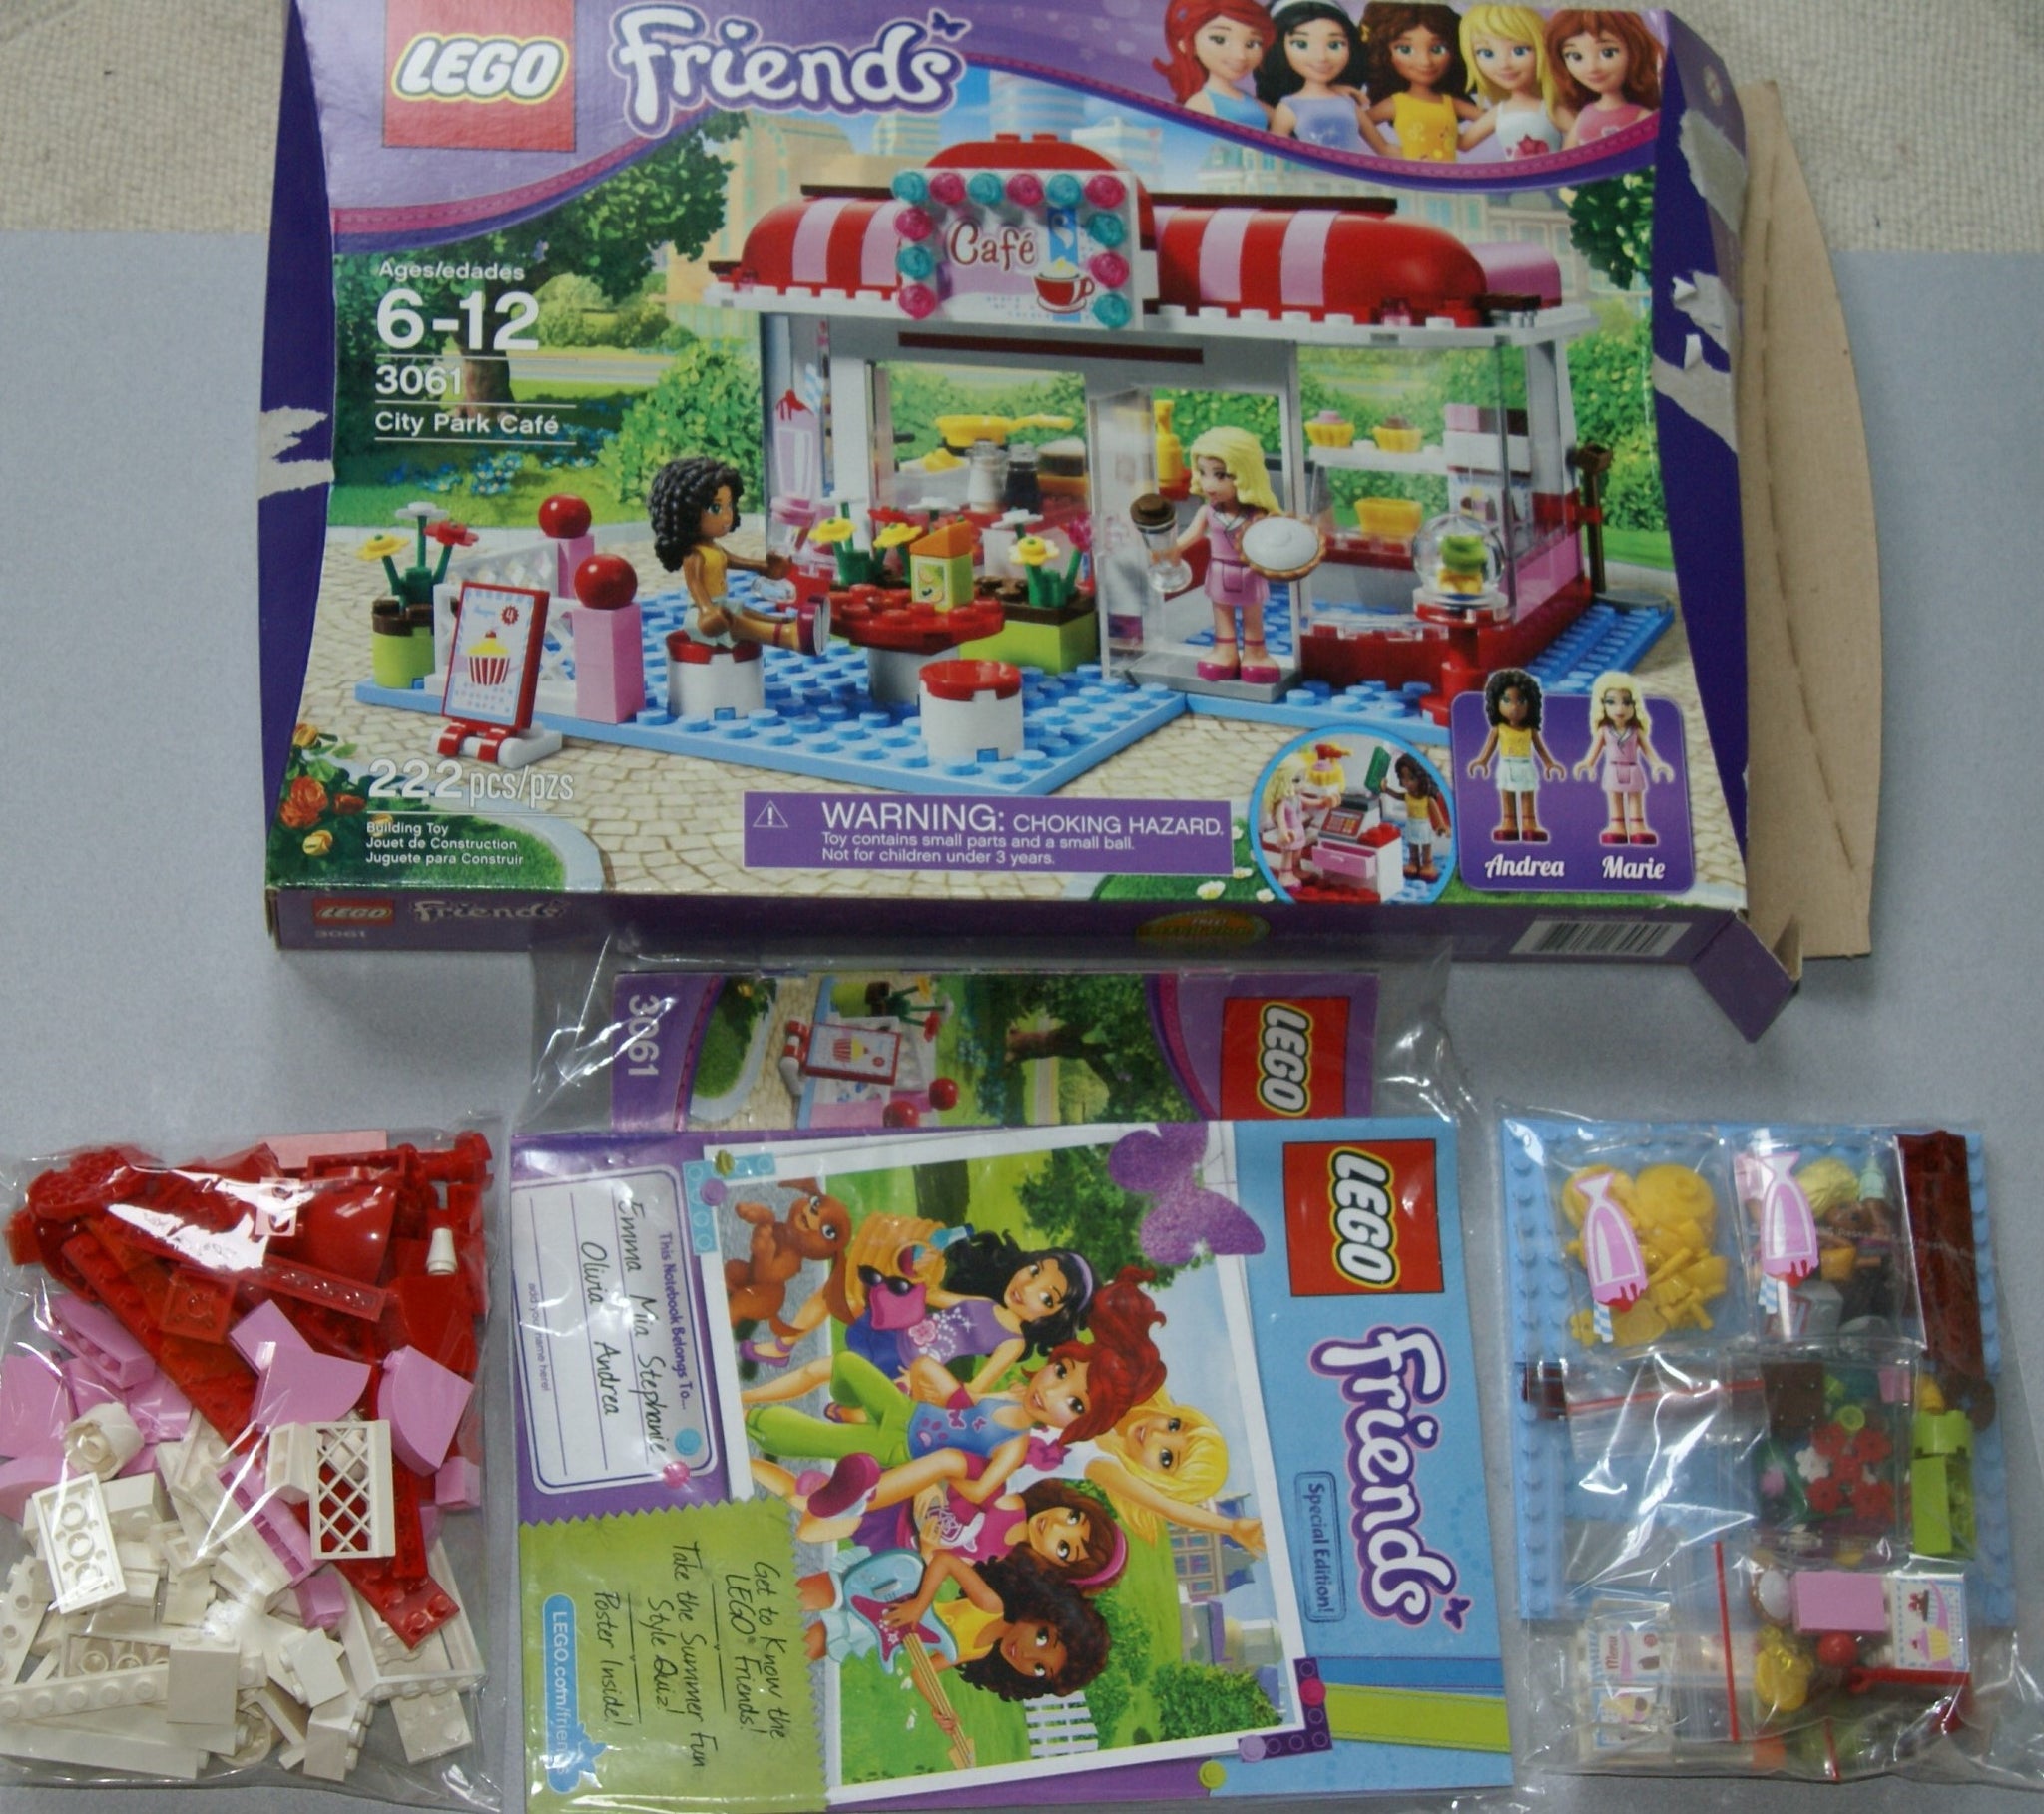 LEGO Friends City Park Cafe - Now $19.40 (Reg $30) - Finding Debra